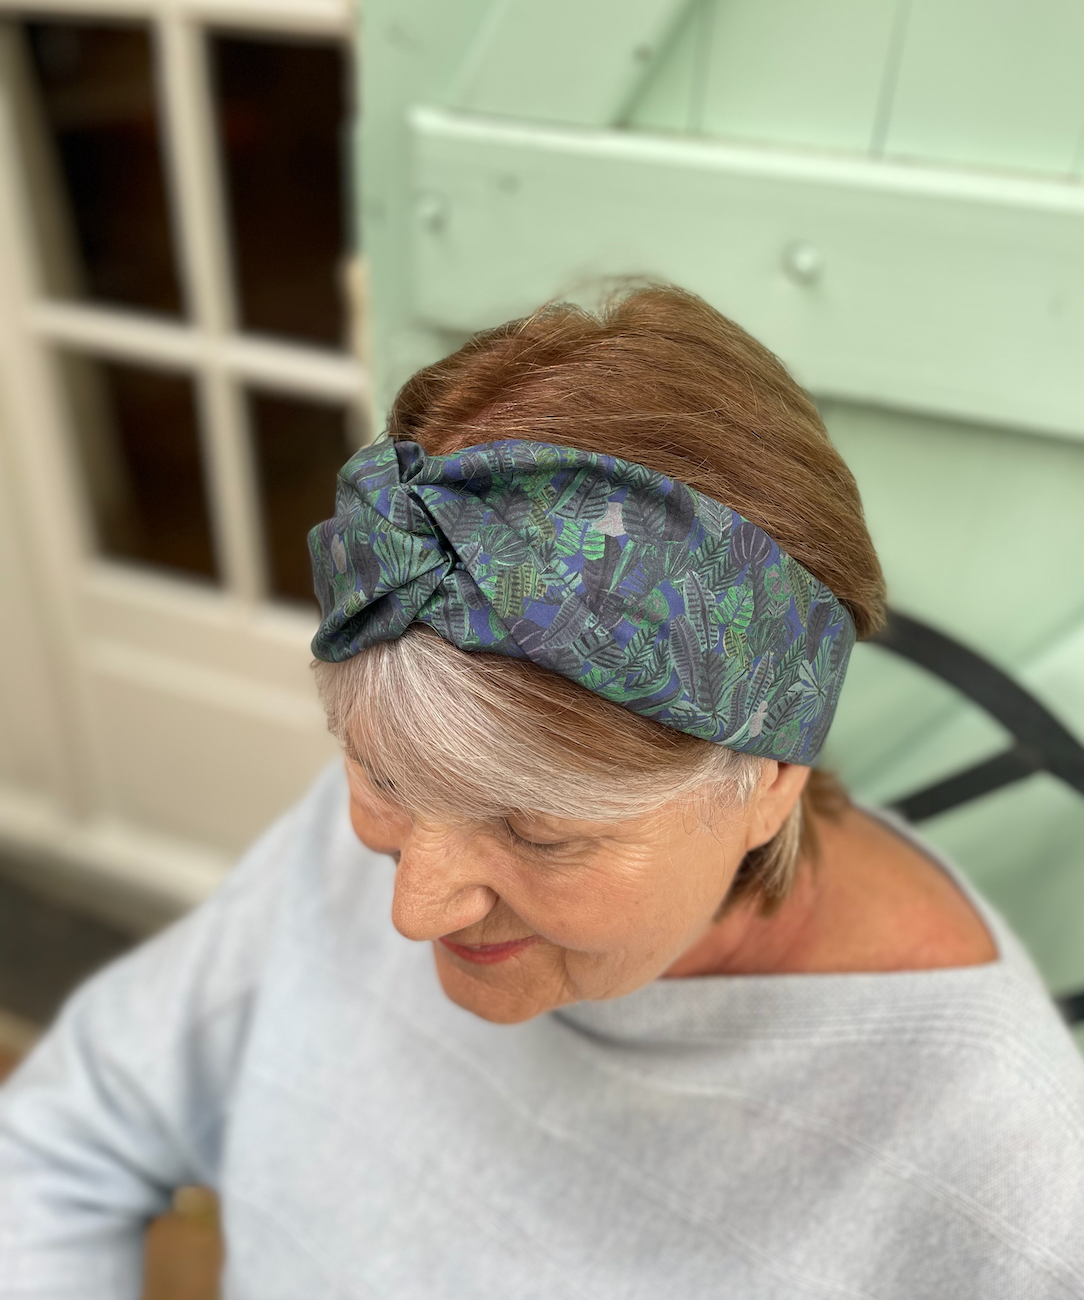 Twisted Turban Headband - Liberty of London Chaparrel - Navy and Green Fern Print